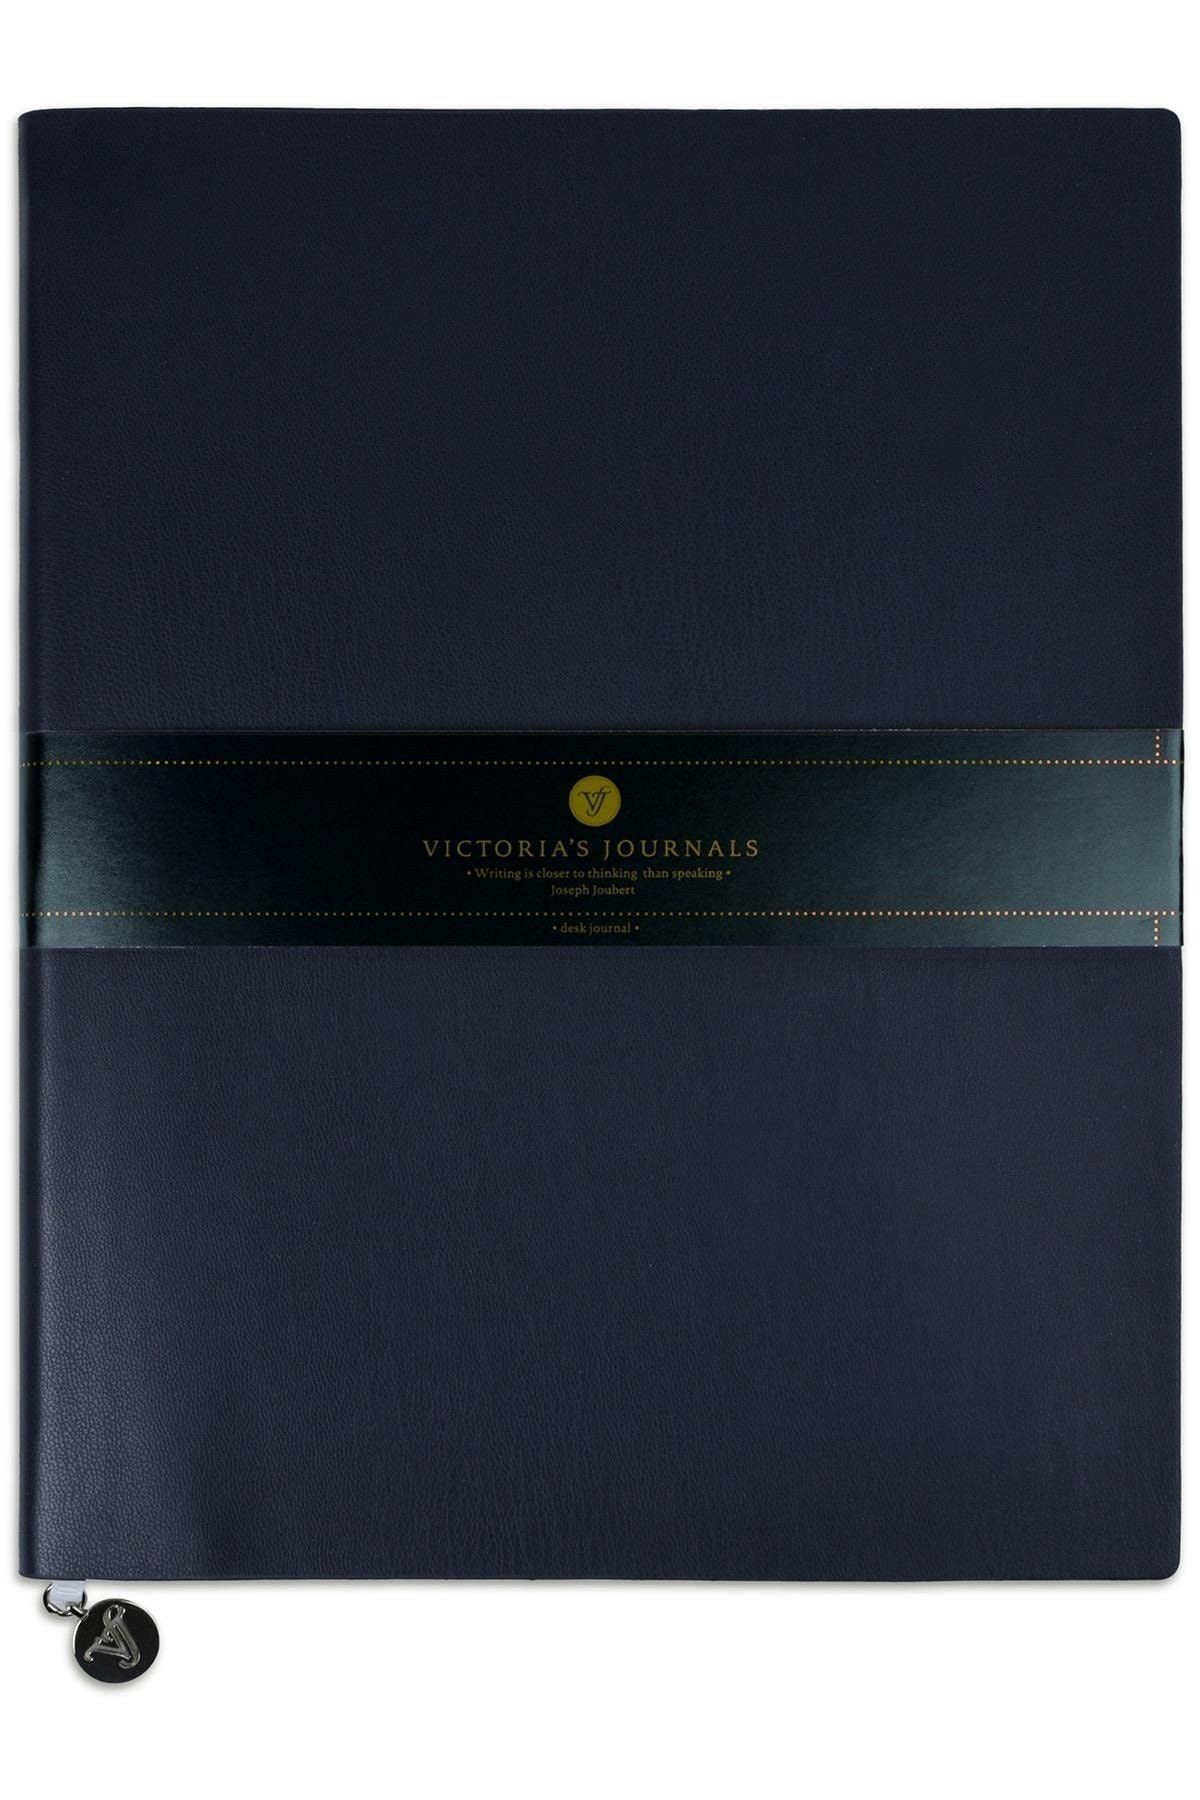 Victoria's Journals Smyth Flexy Classic Esnek Kapak Vegan Deri Lacivert 192 Sayfa A4 80gr. Çizgili Defter